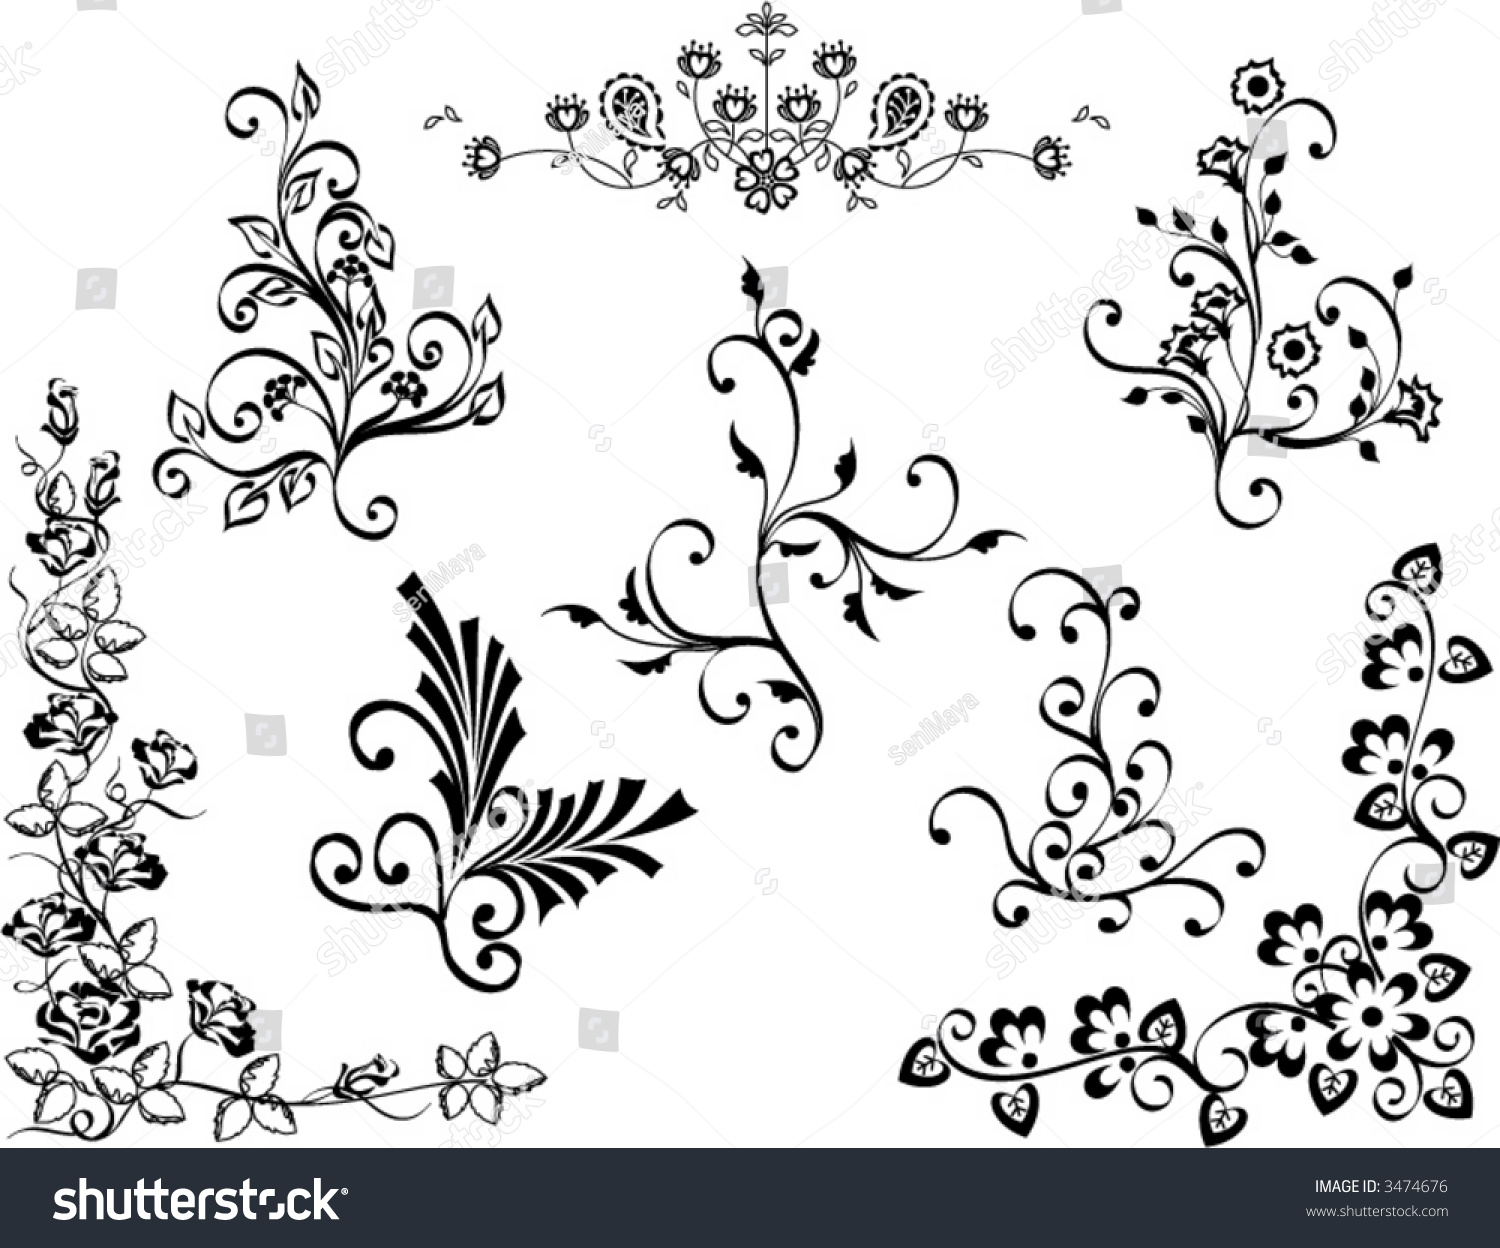 Vines And Flowers Design Stock Vector Illustration 3474676 : Shutterstock